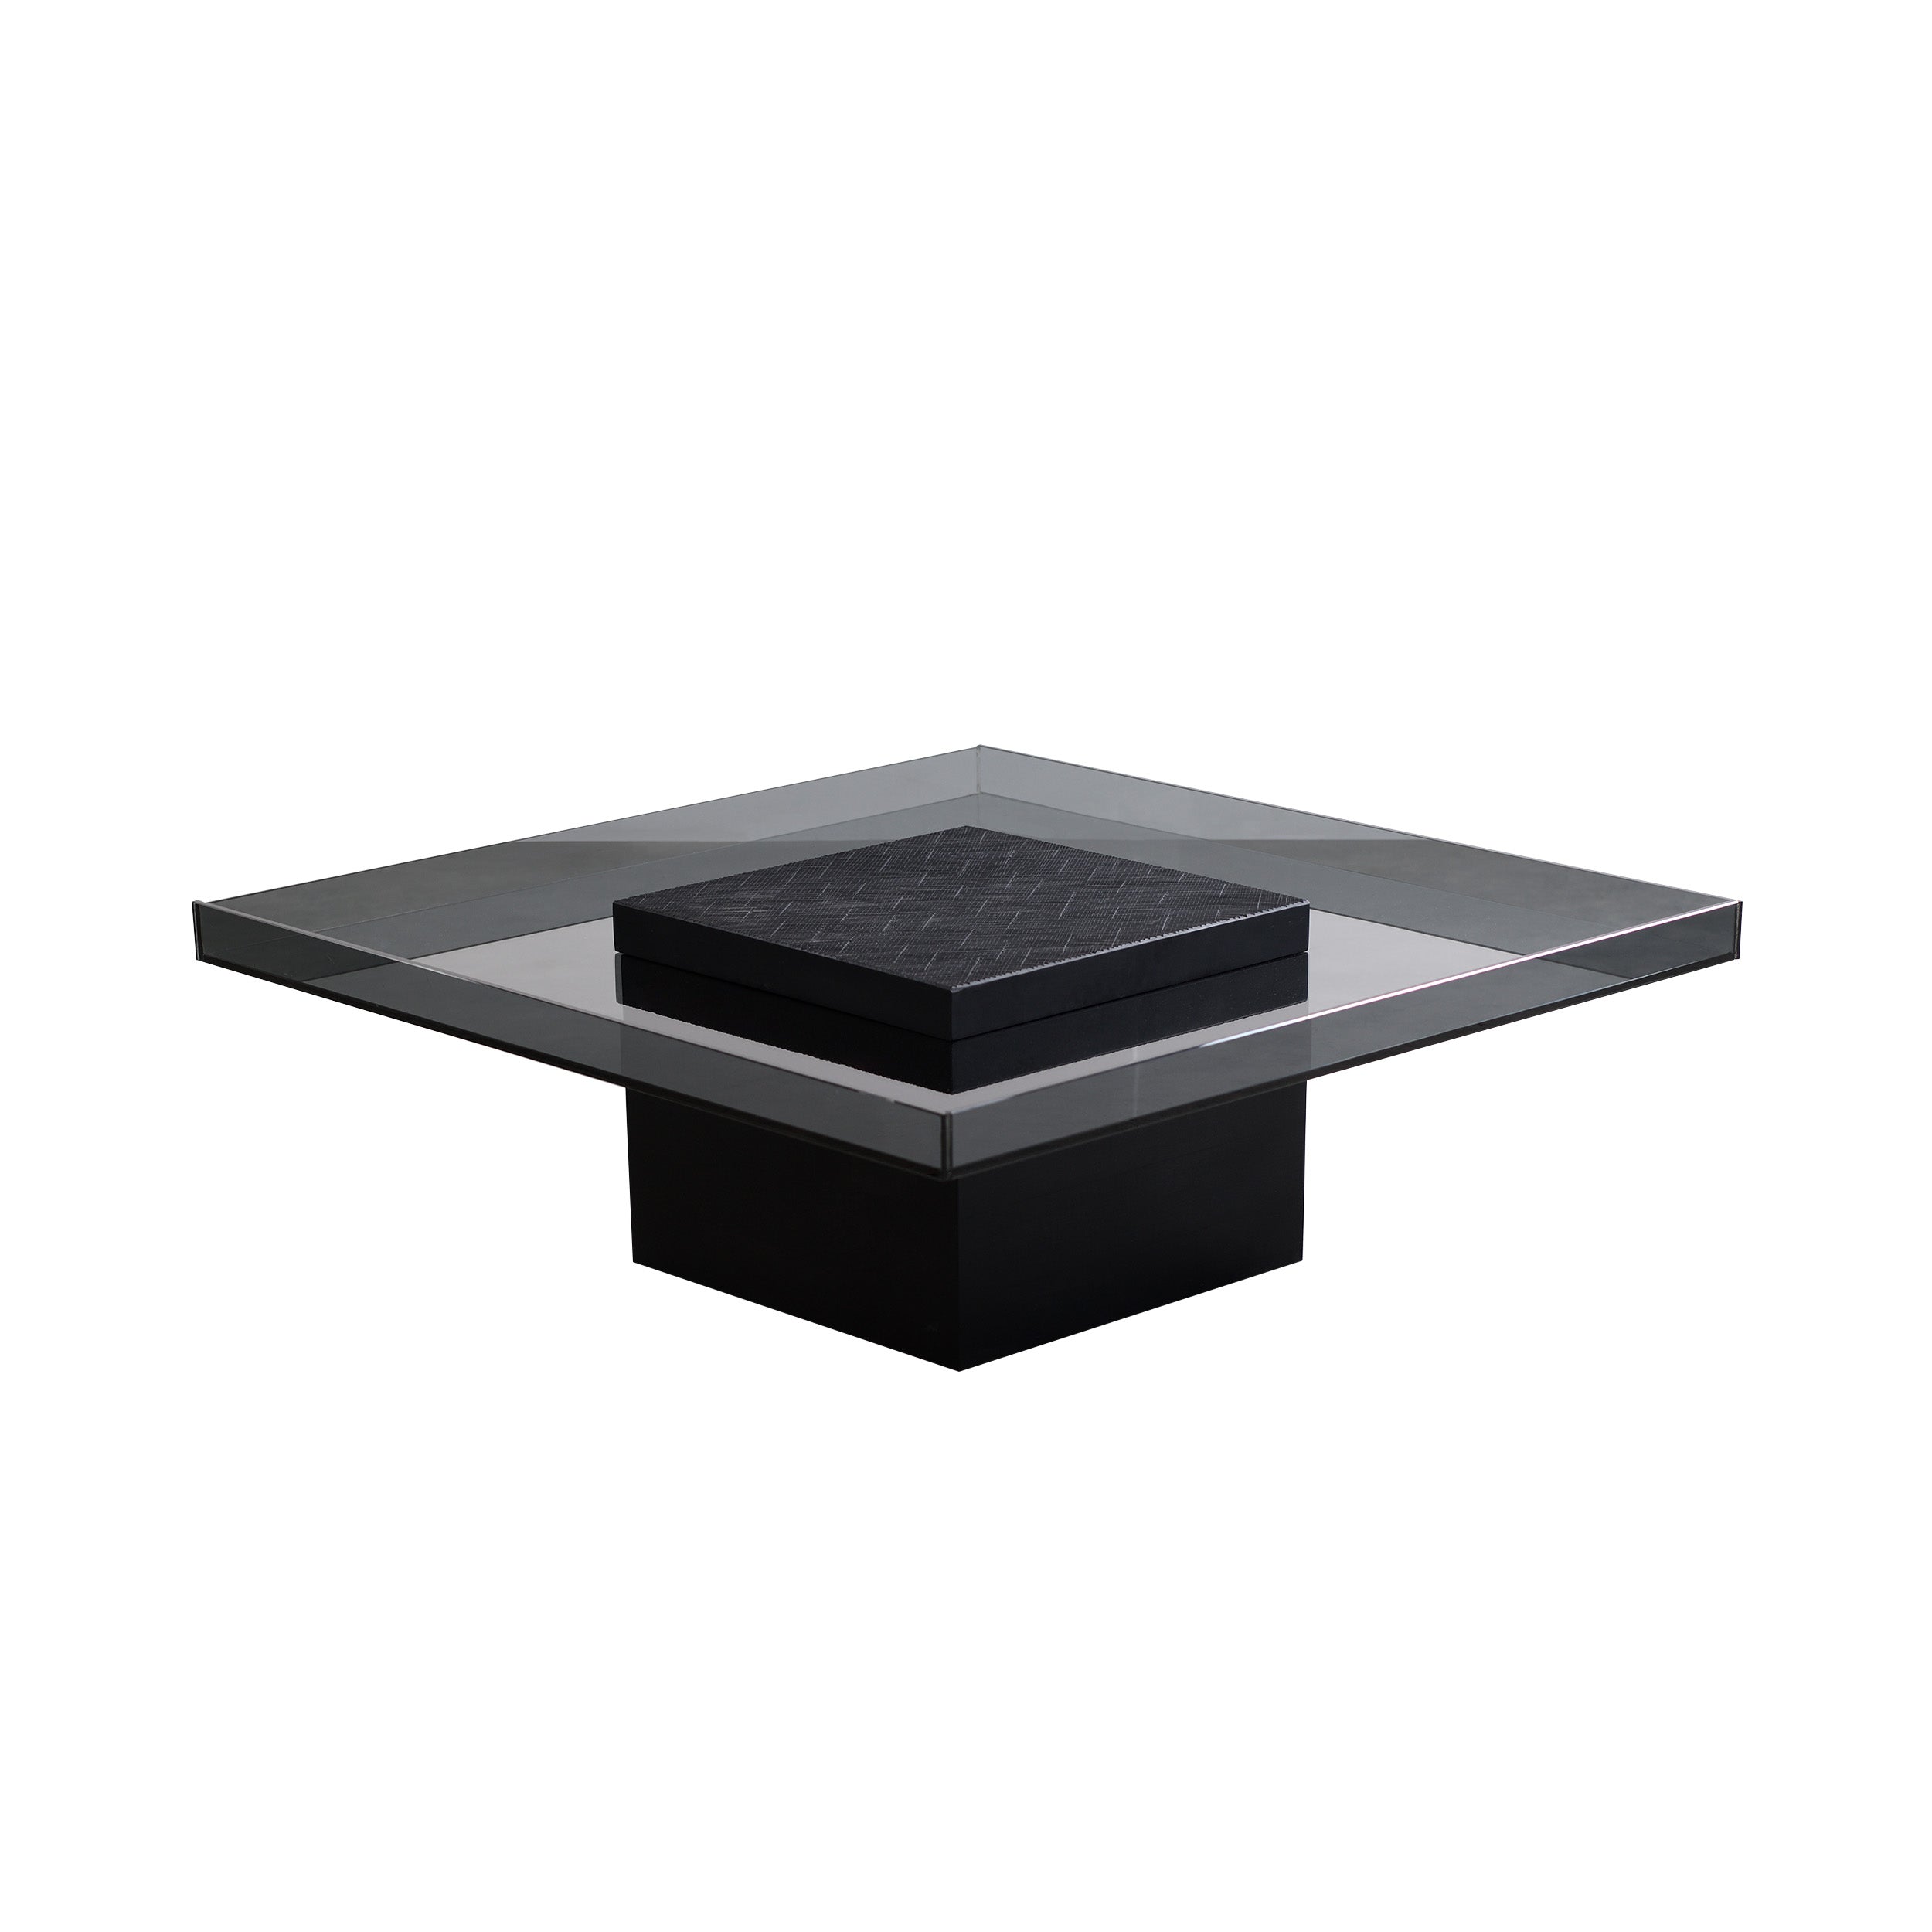 Koba Coffee Table: Square